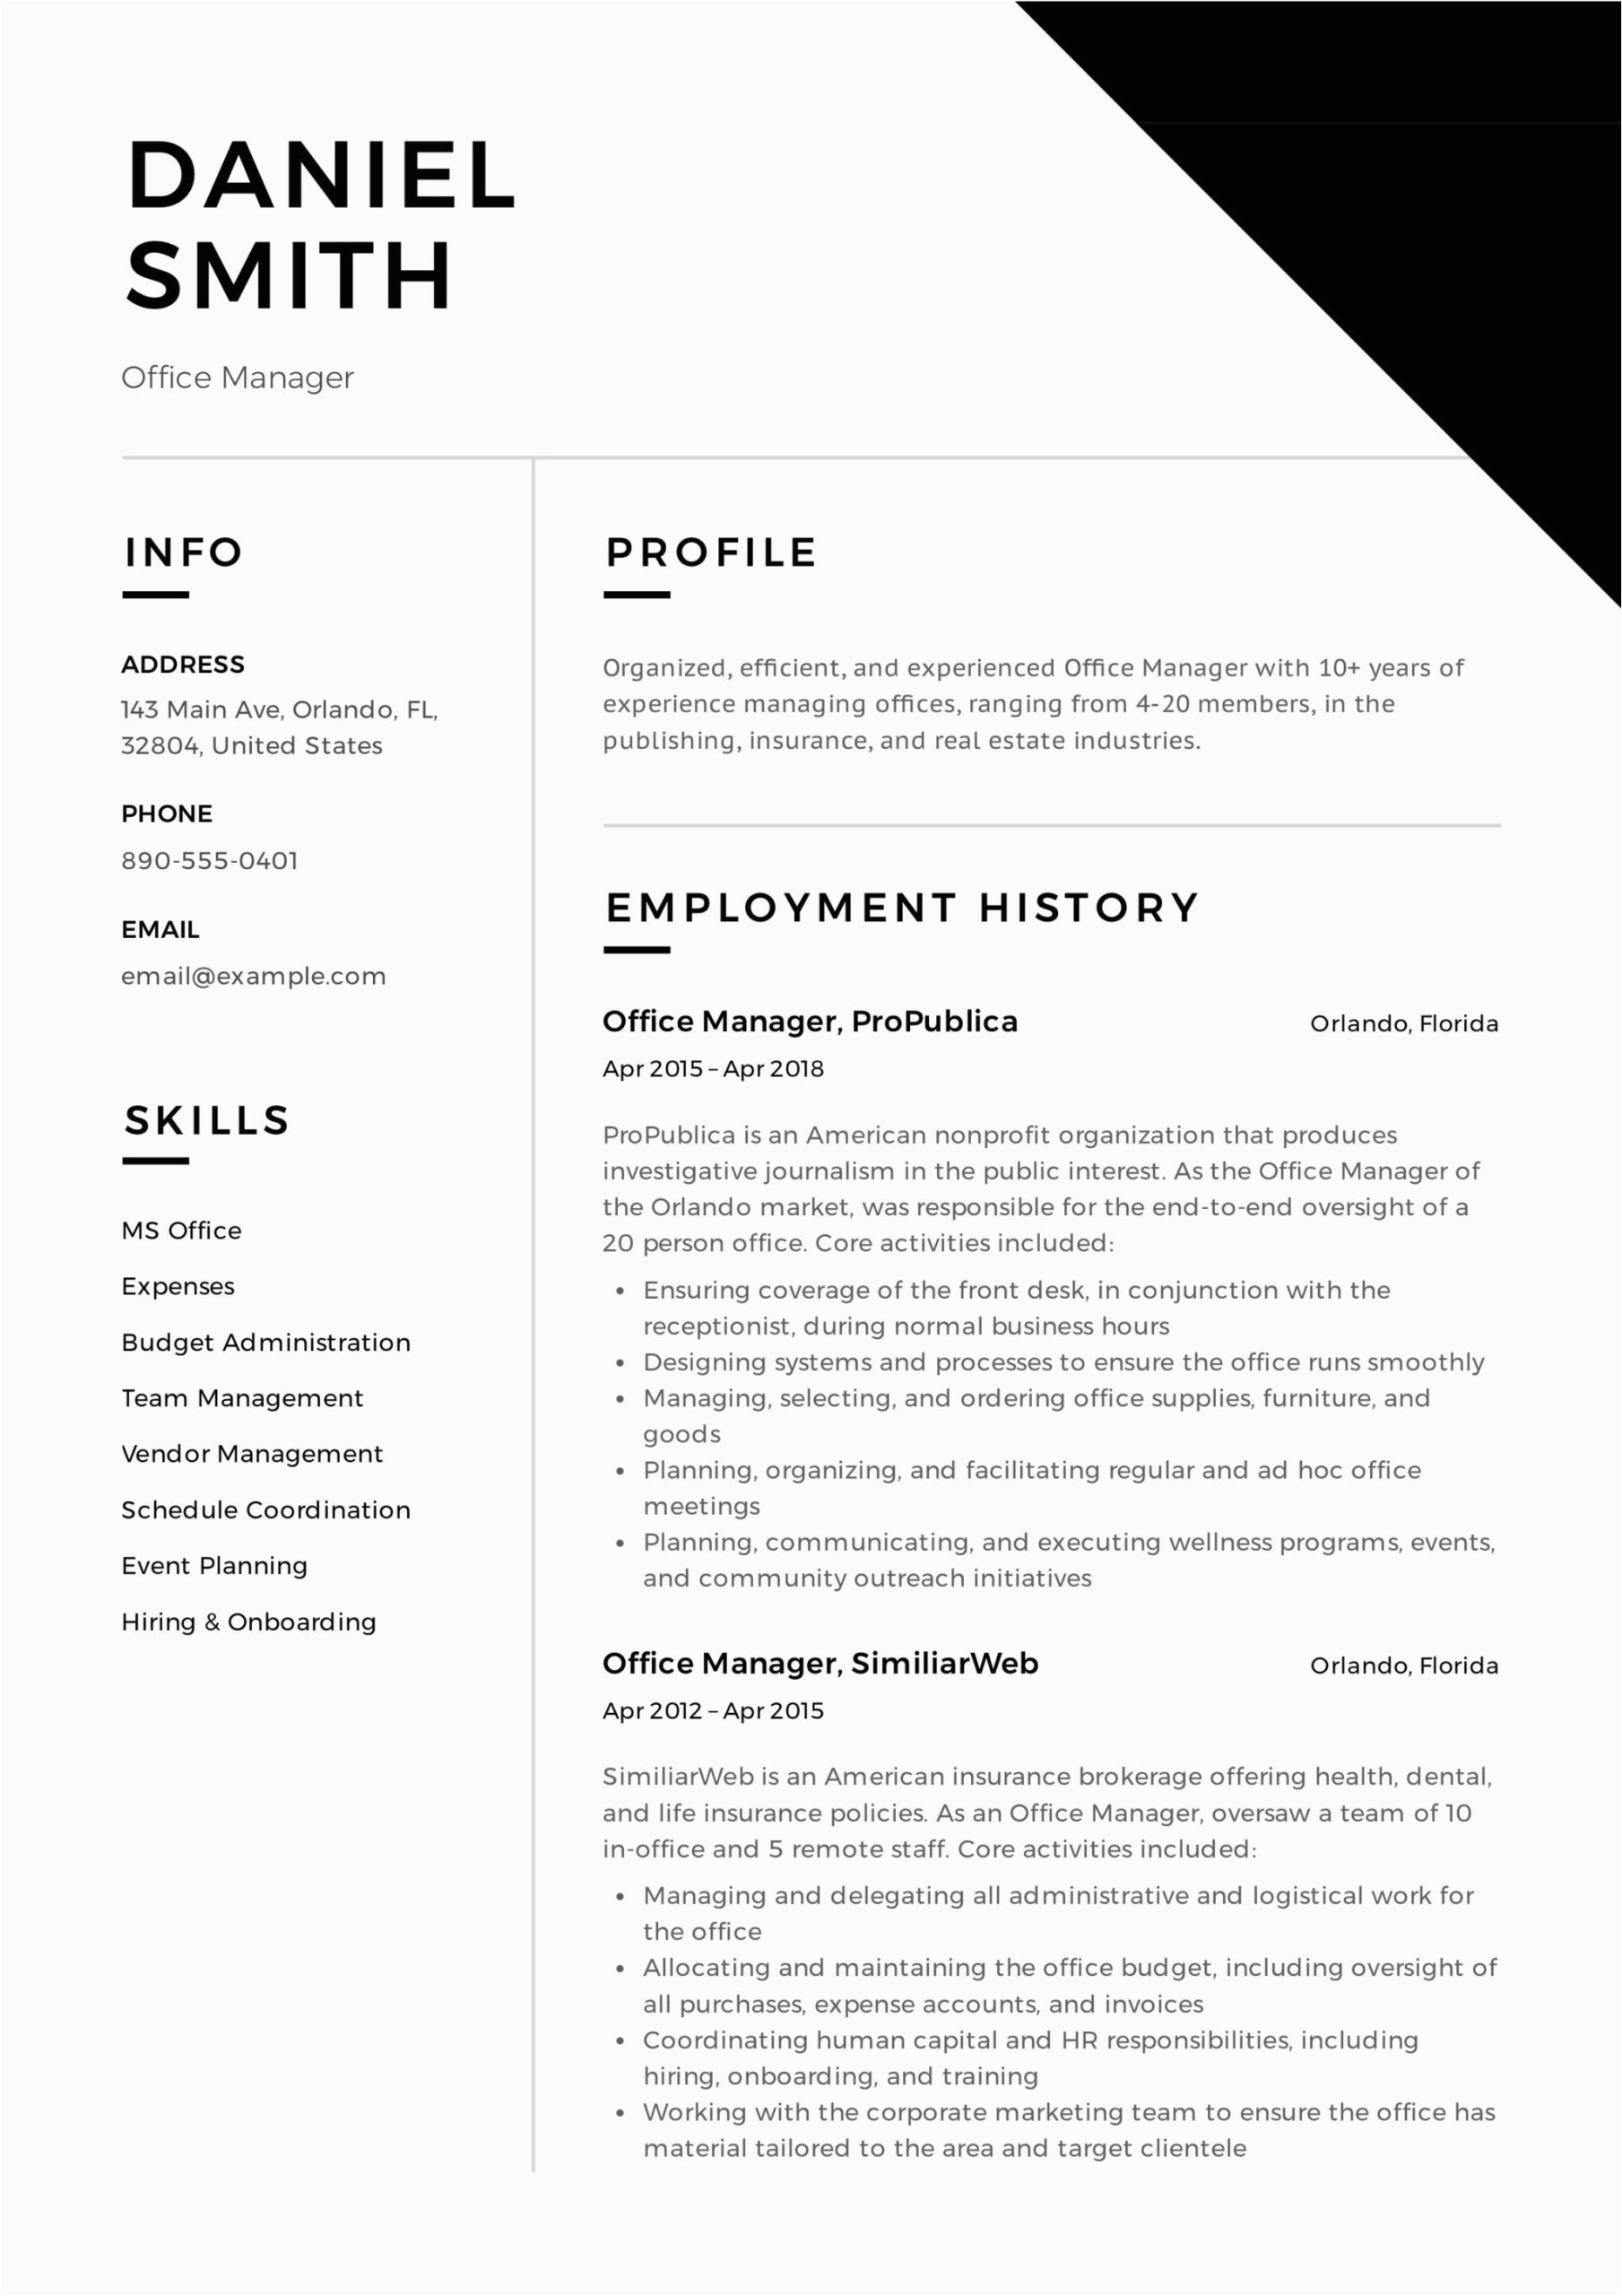 Office Manager Job Description Resume Sample Guide Fice Manager Resume [ 12 Samples ] Pdf